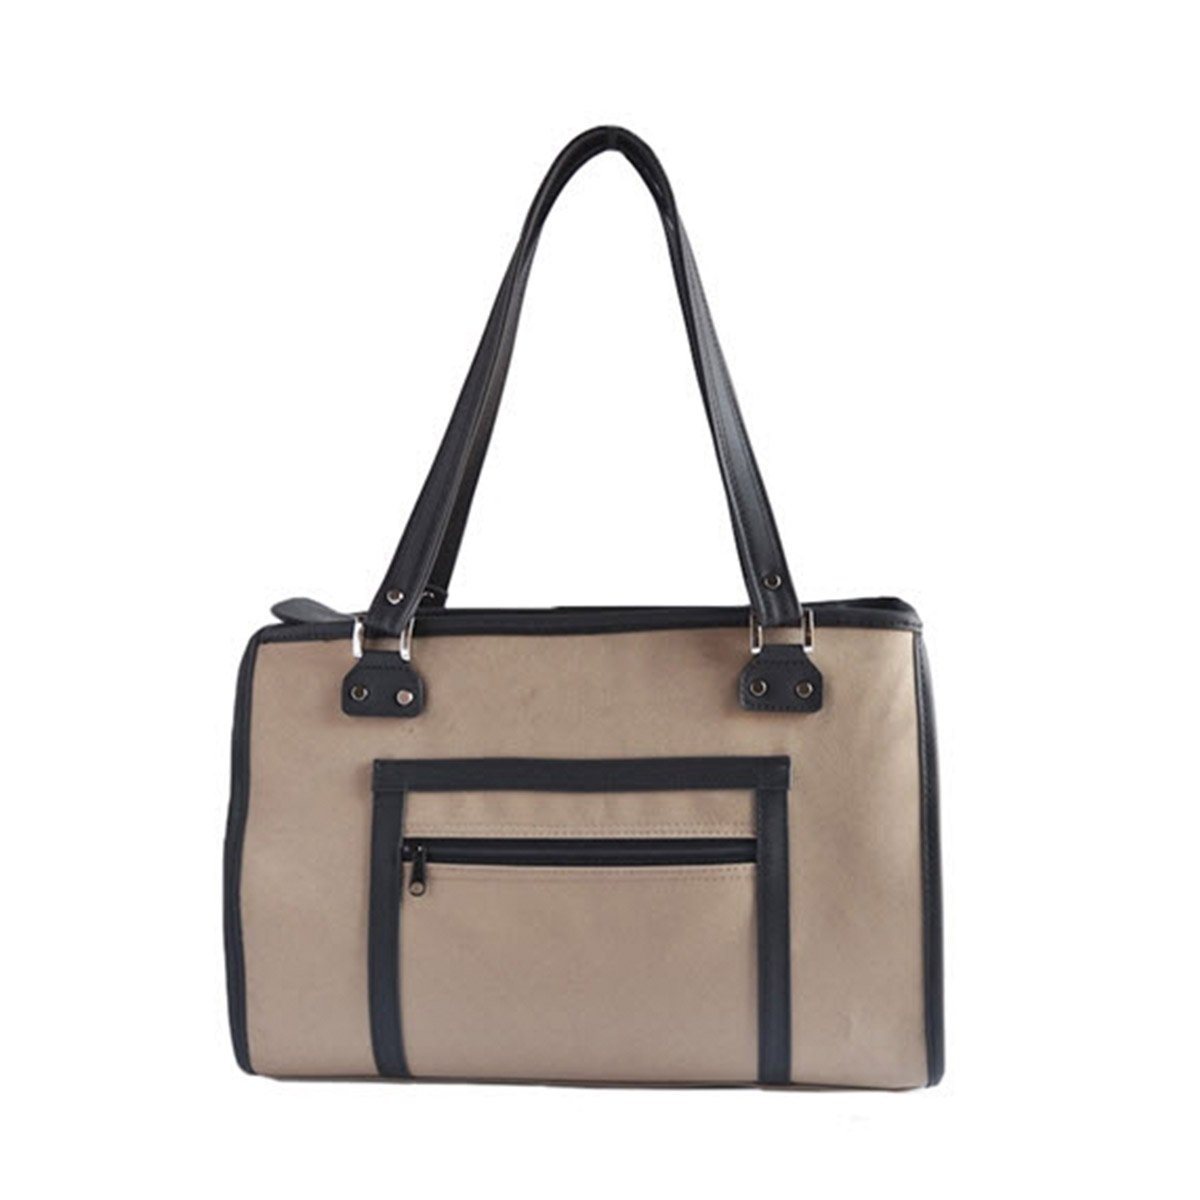 Payton Dog Carrier Handbag - Khaki | Pawlicious & Company